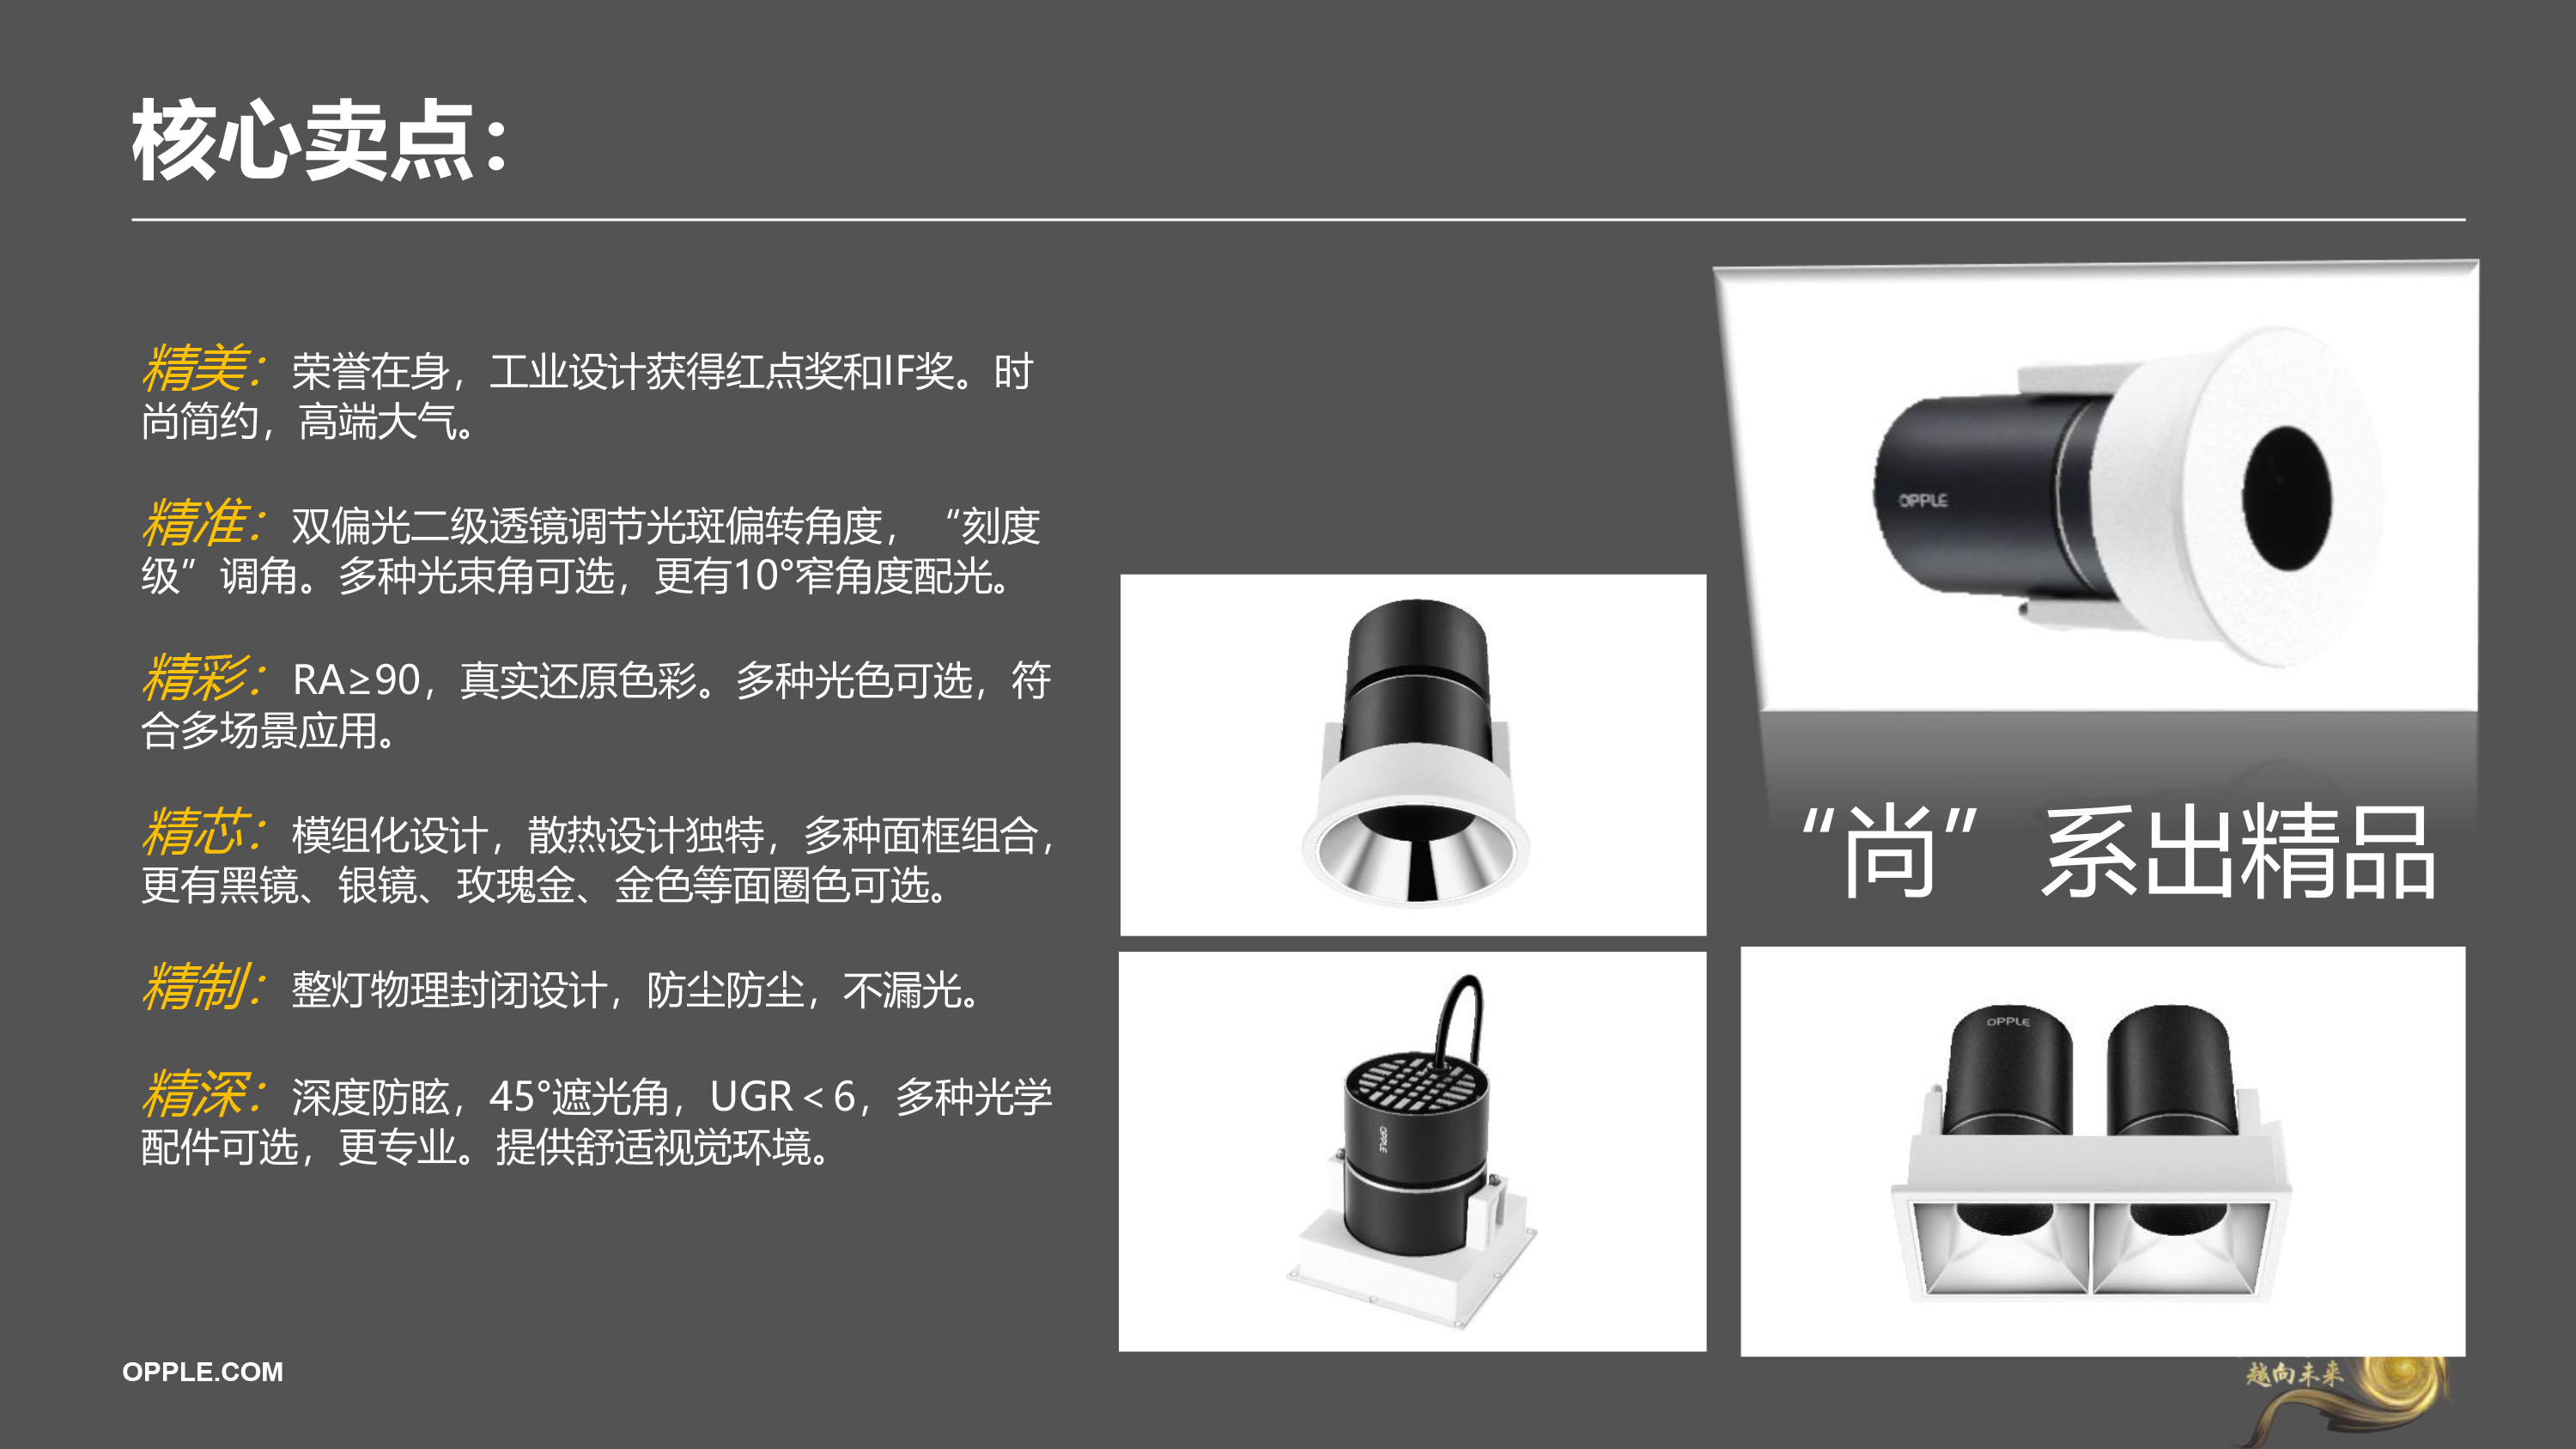 LED专业型嵌入式射灯-尚系列-产品介绍(1)-4.jpg